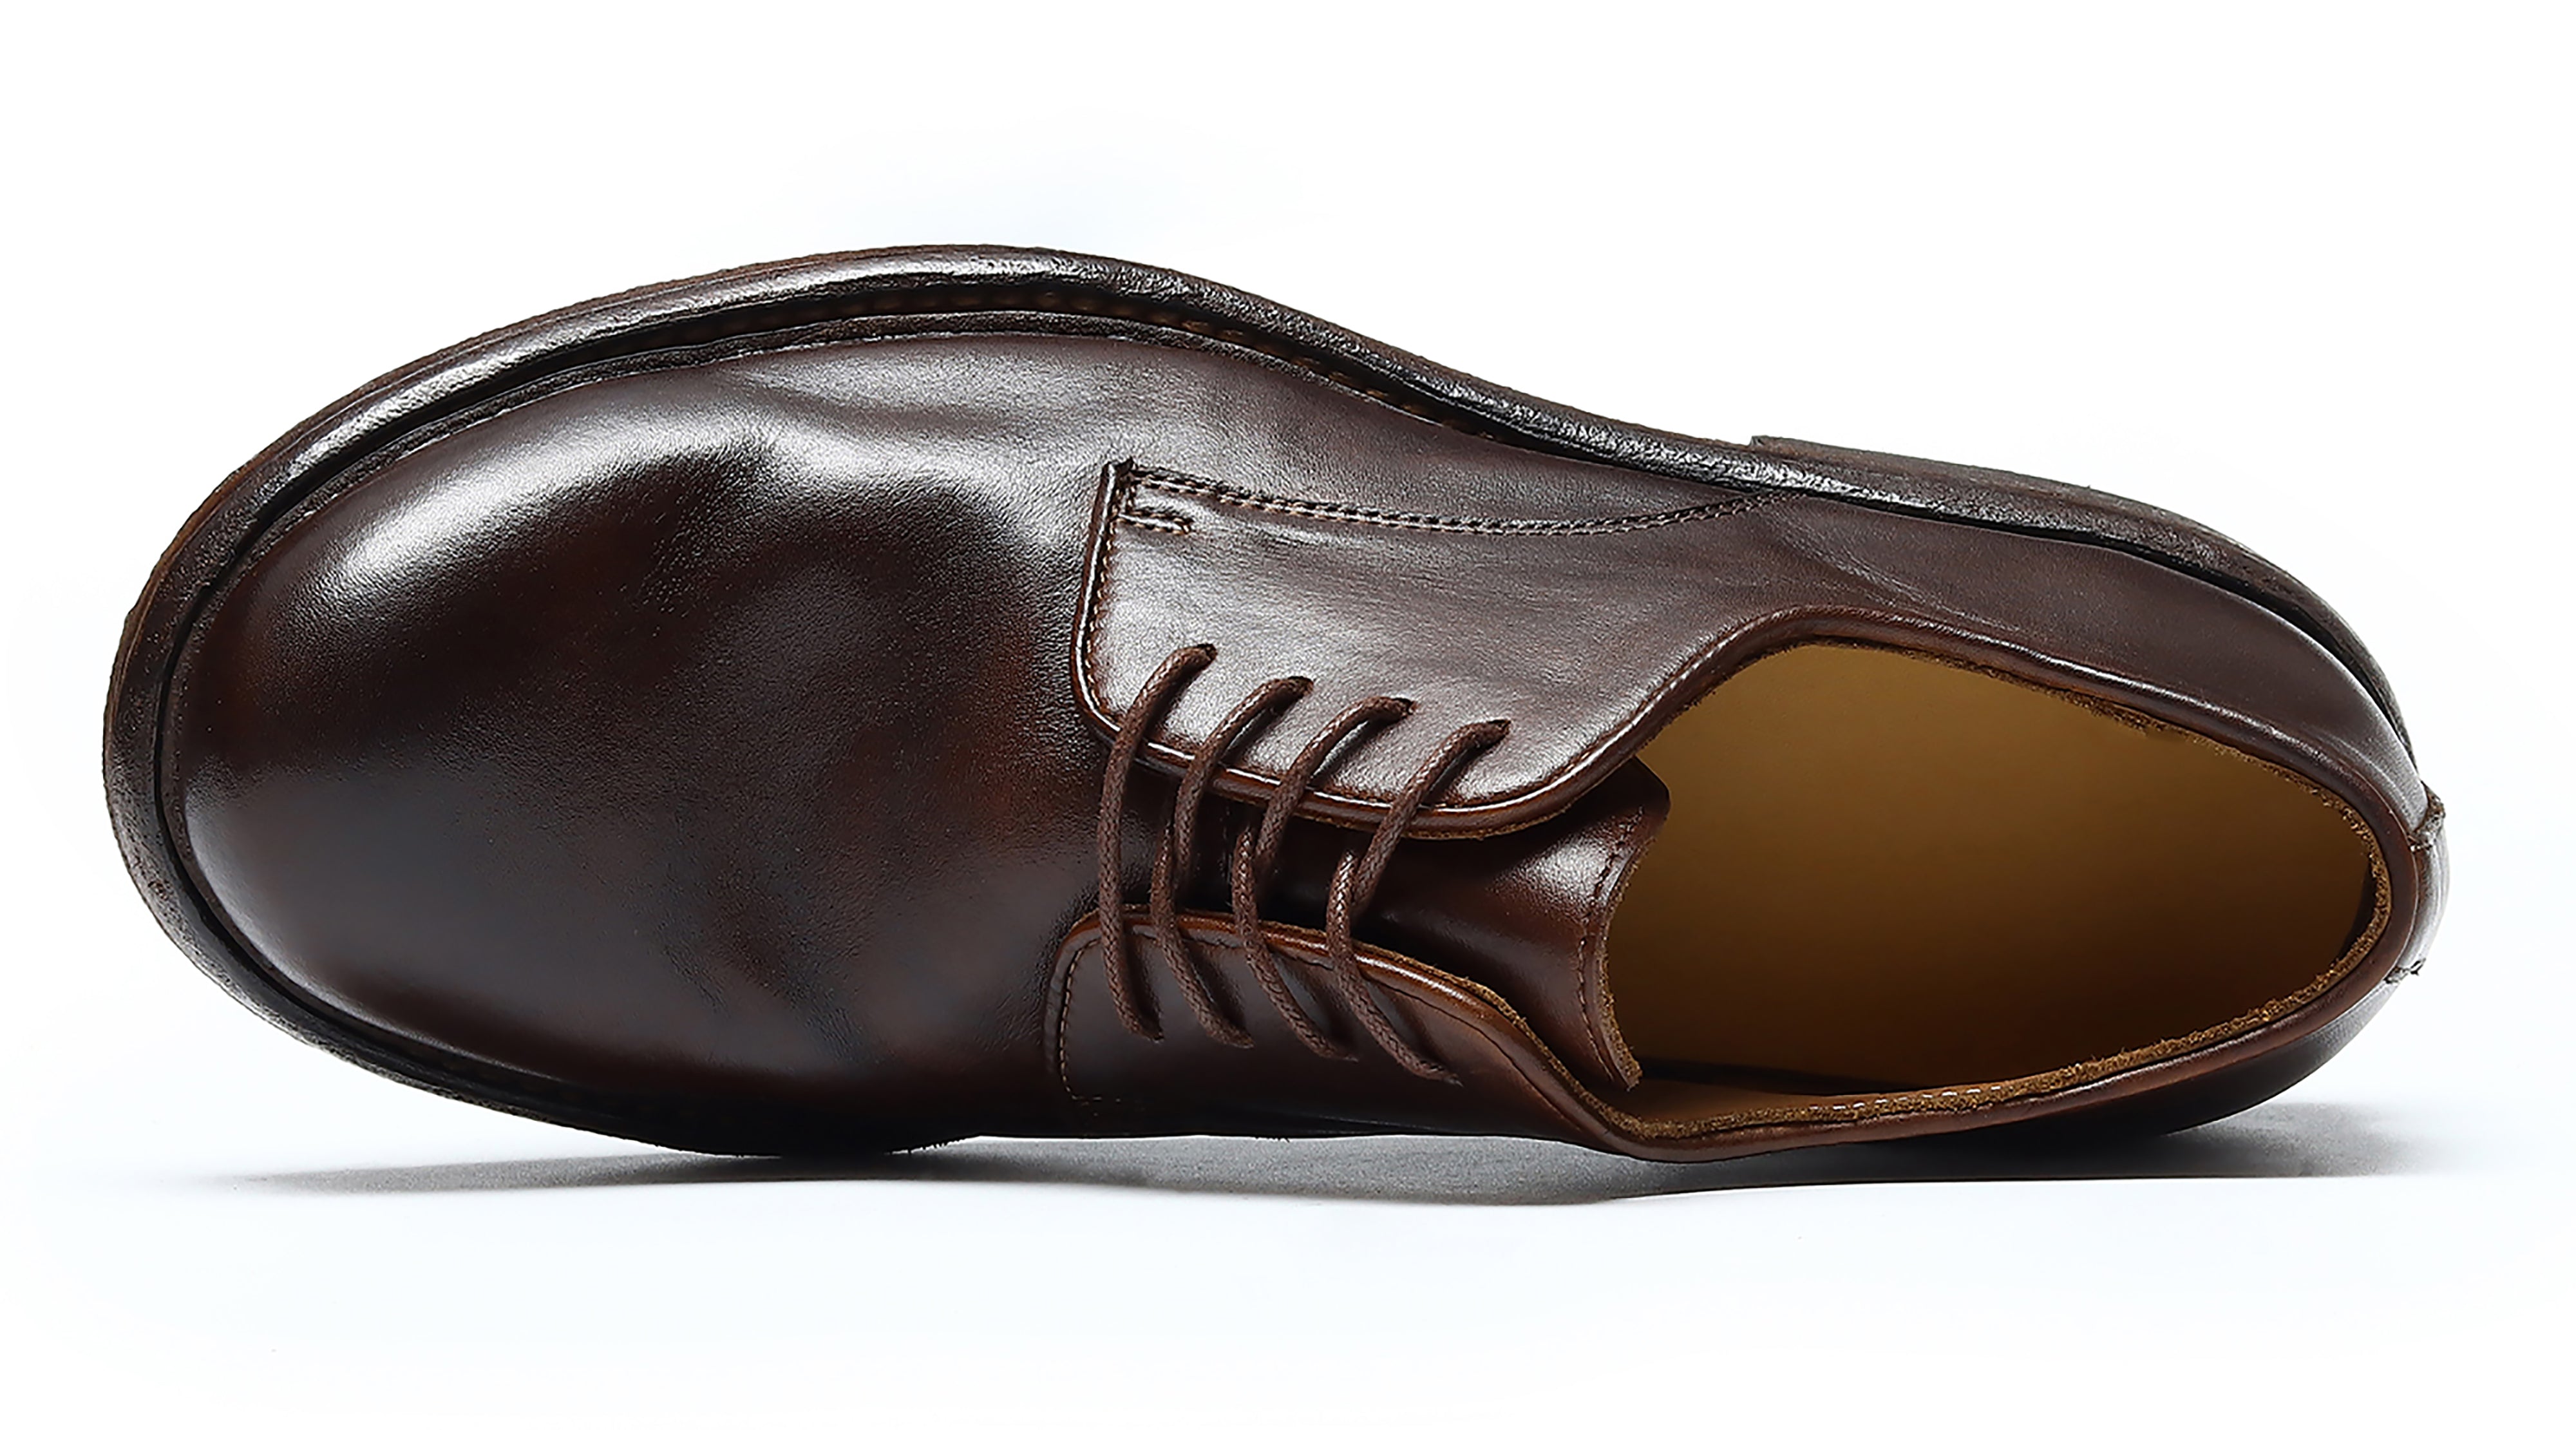 Men's Handmade Genuine Leather Formal Derby